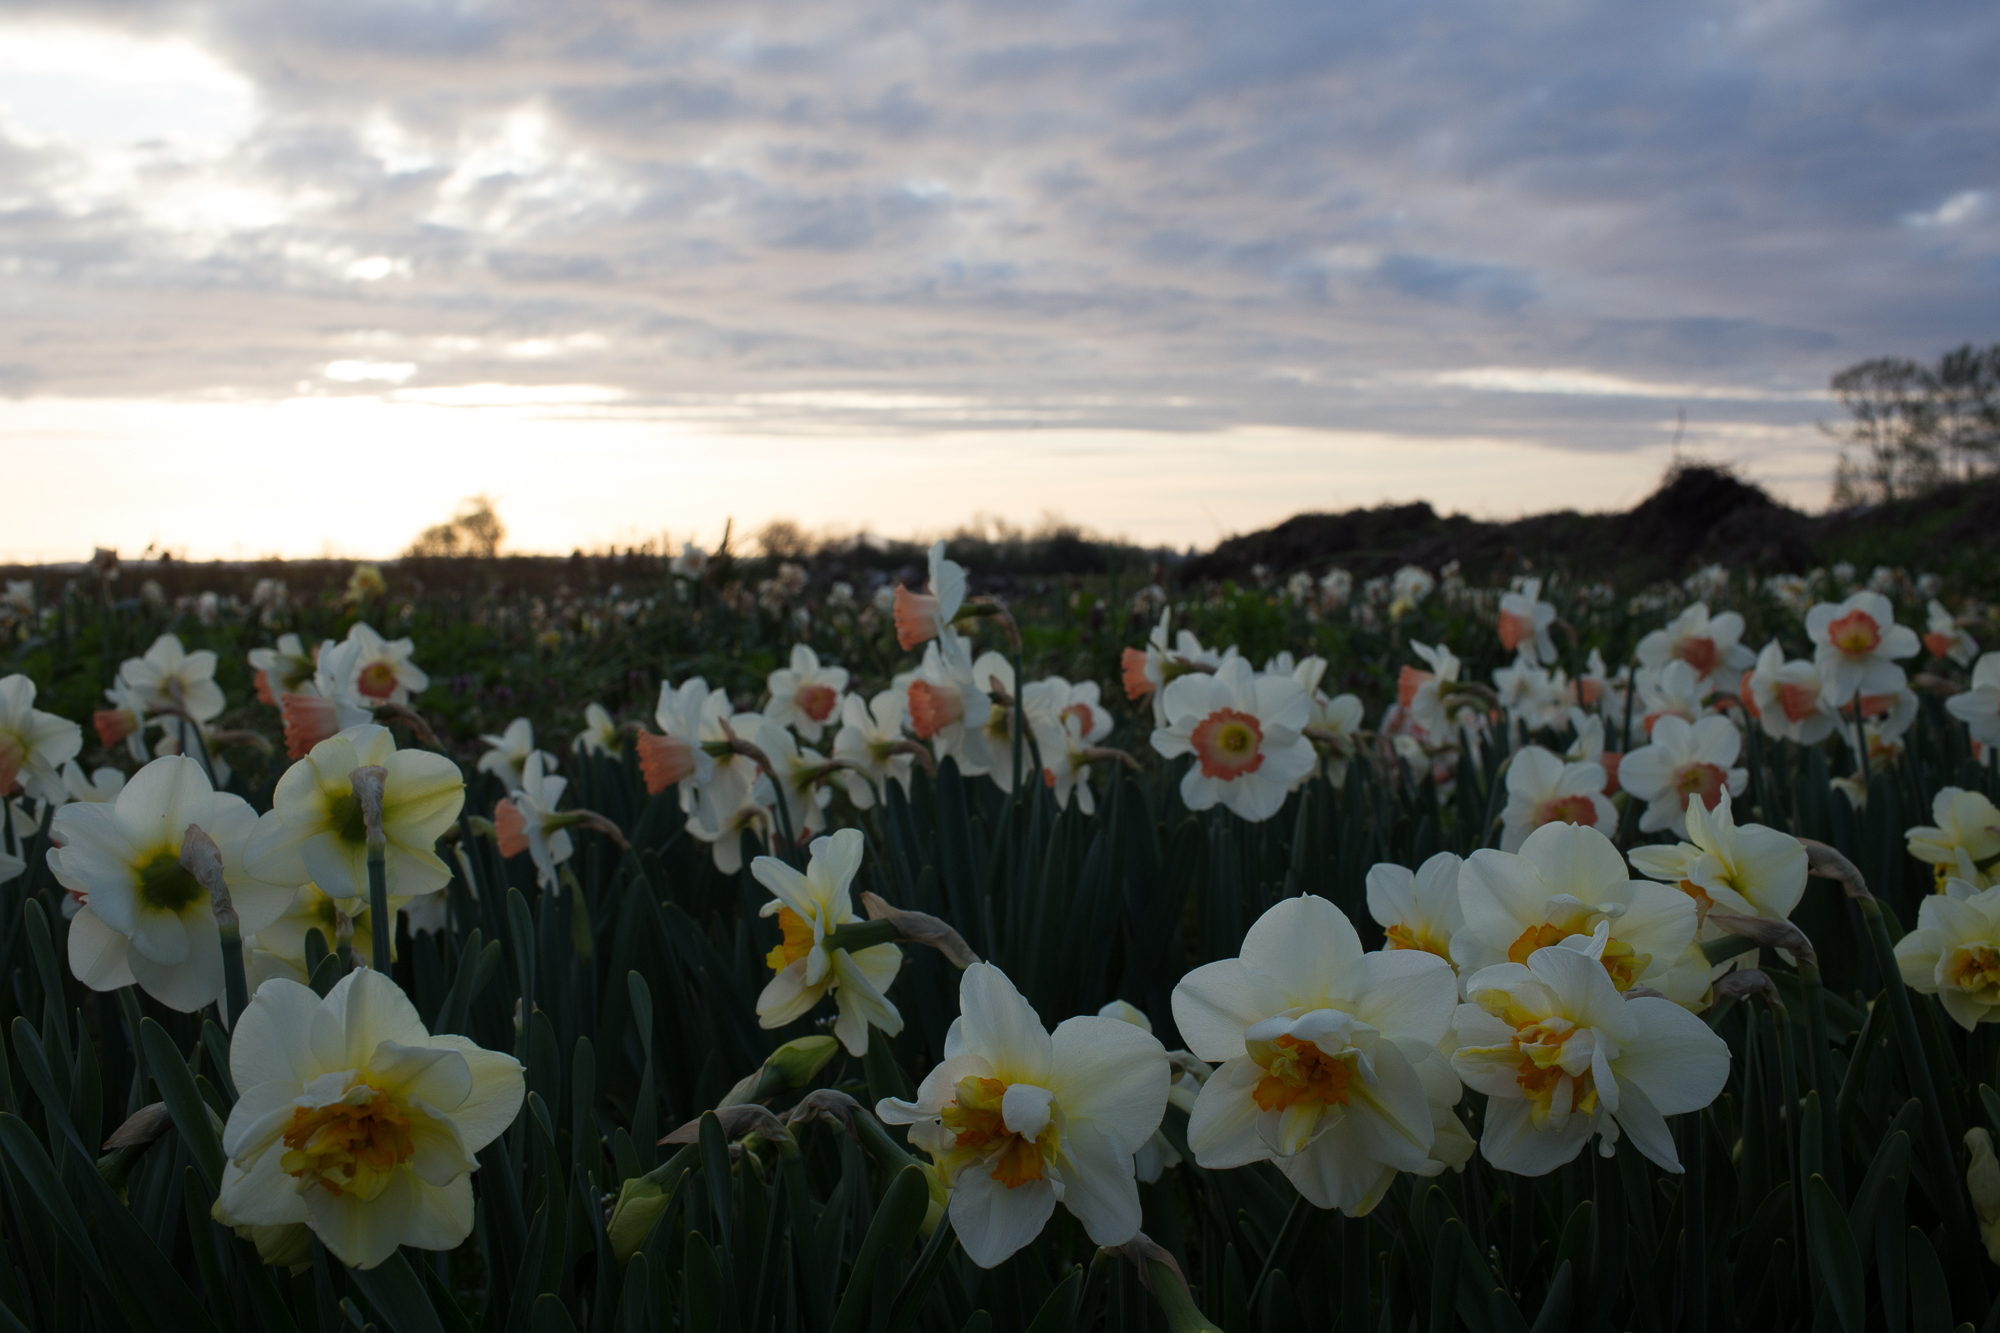 Daffodils growing in a field